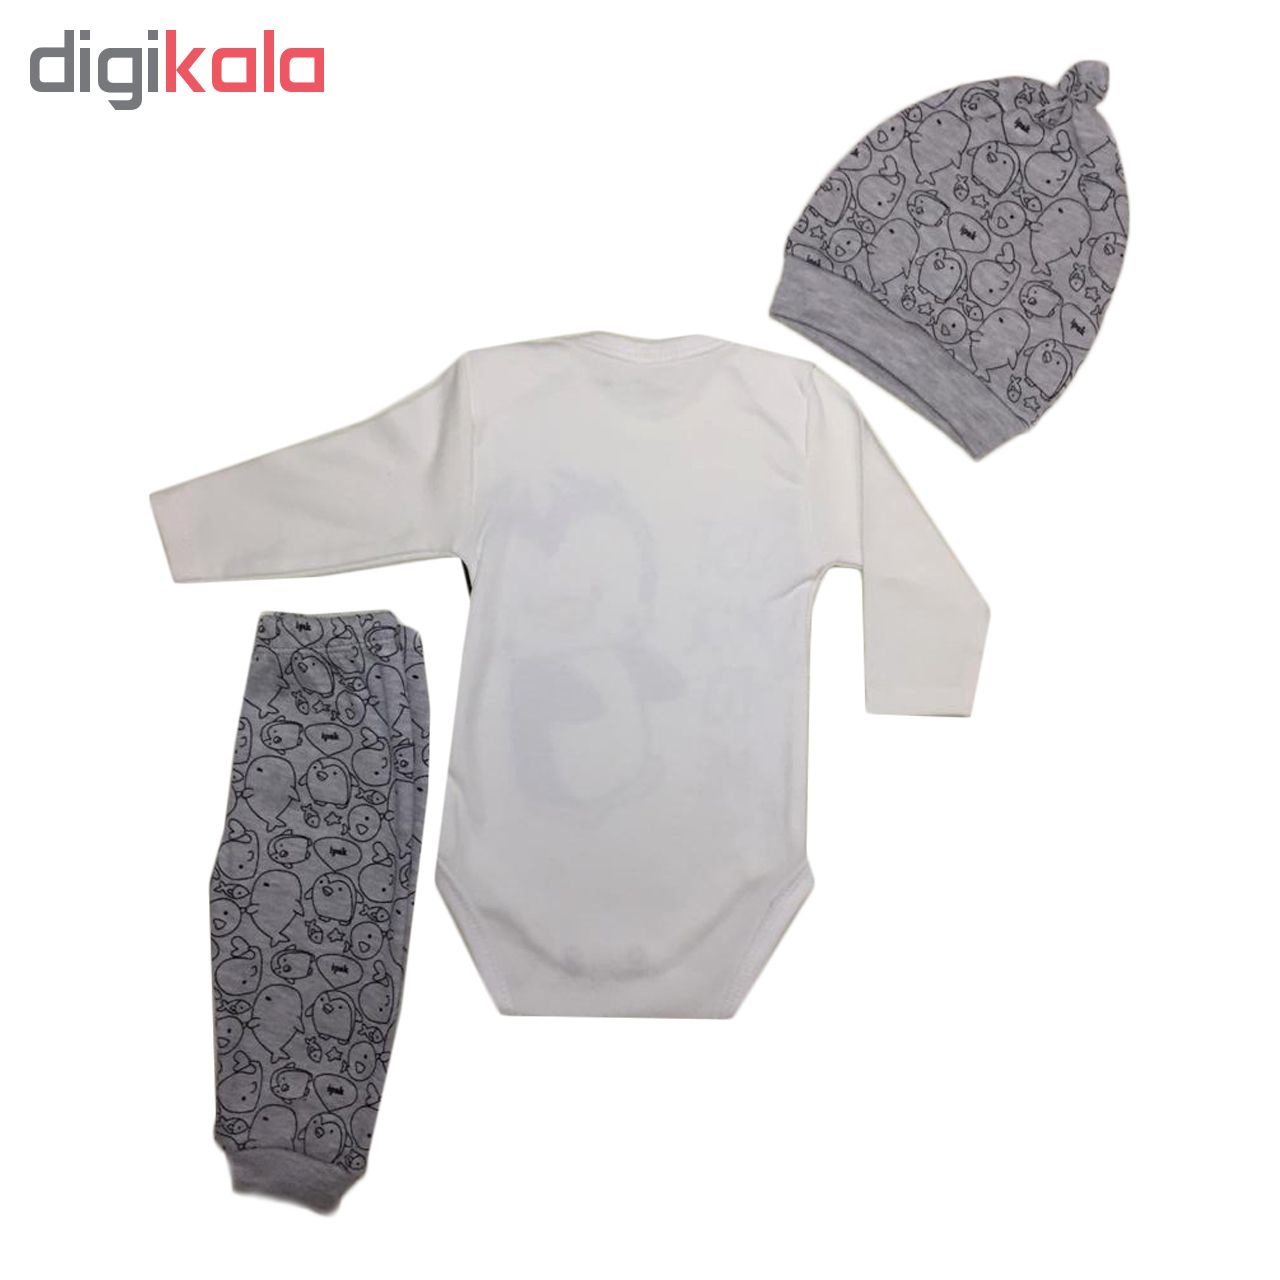 Baby 3-pieces penguin design clothing set